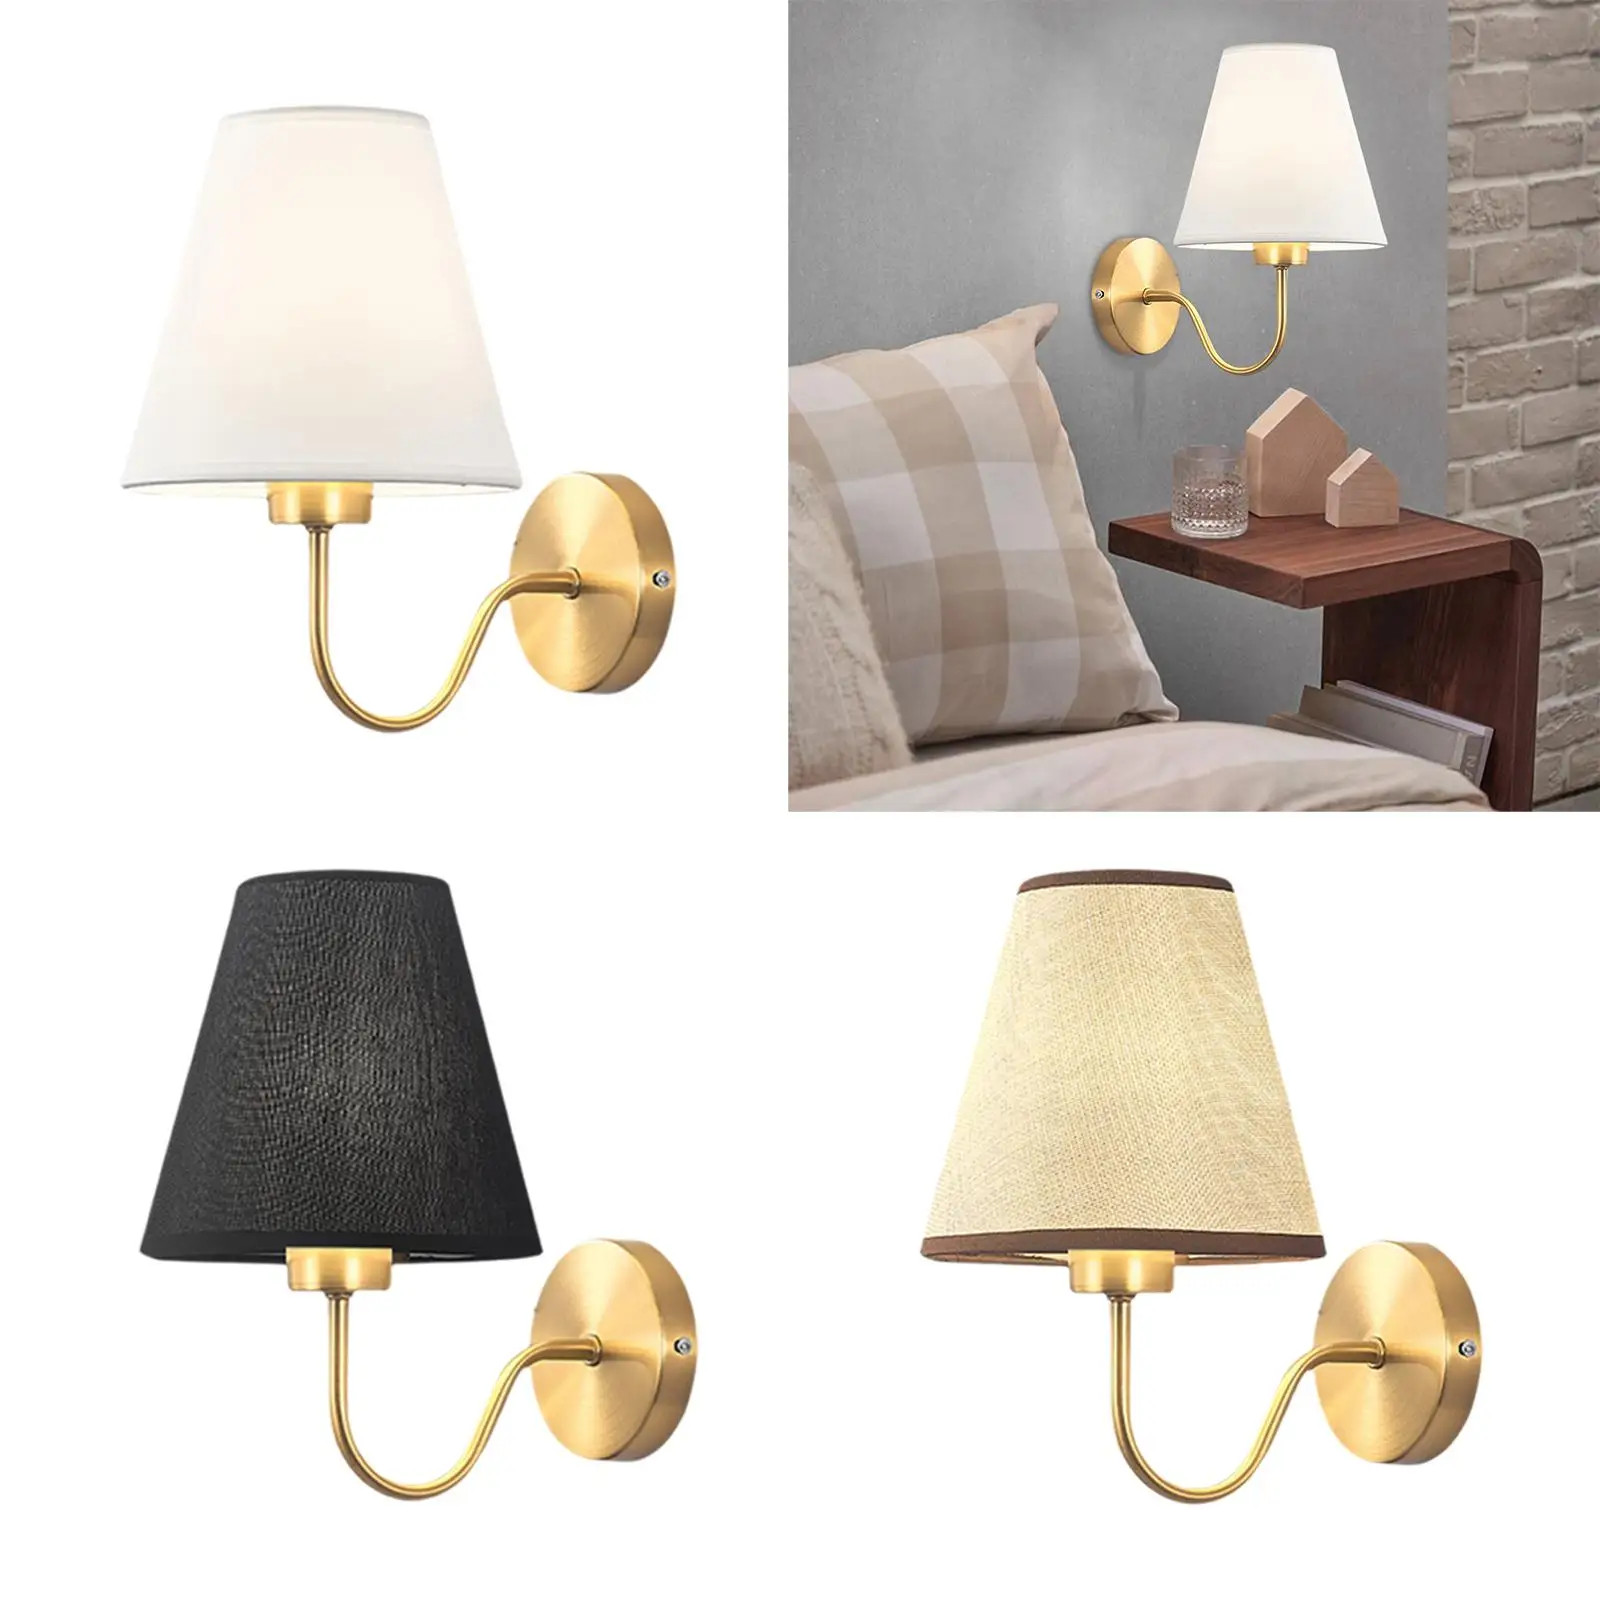 European-style Bedside Lamp, E27, Lampshade, Wall Lamp, Decorative Lighting,